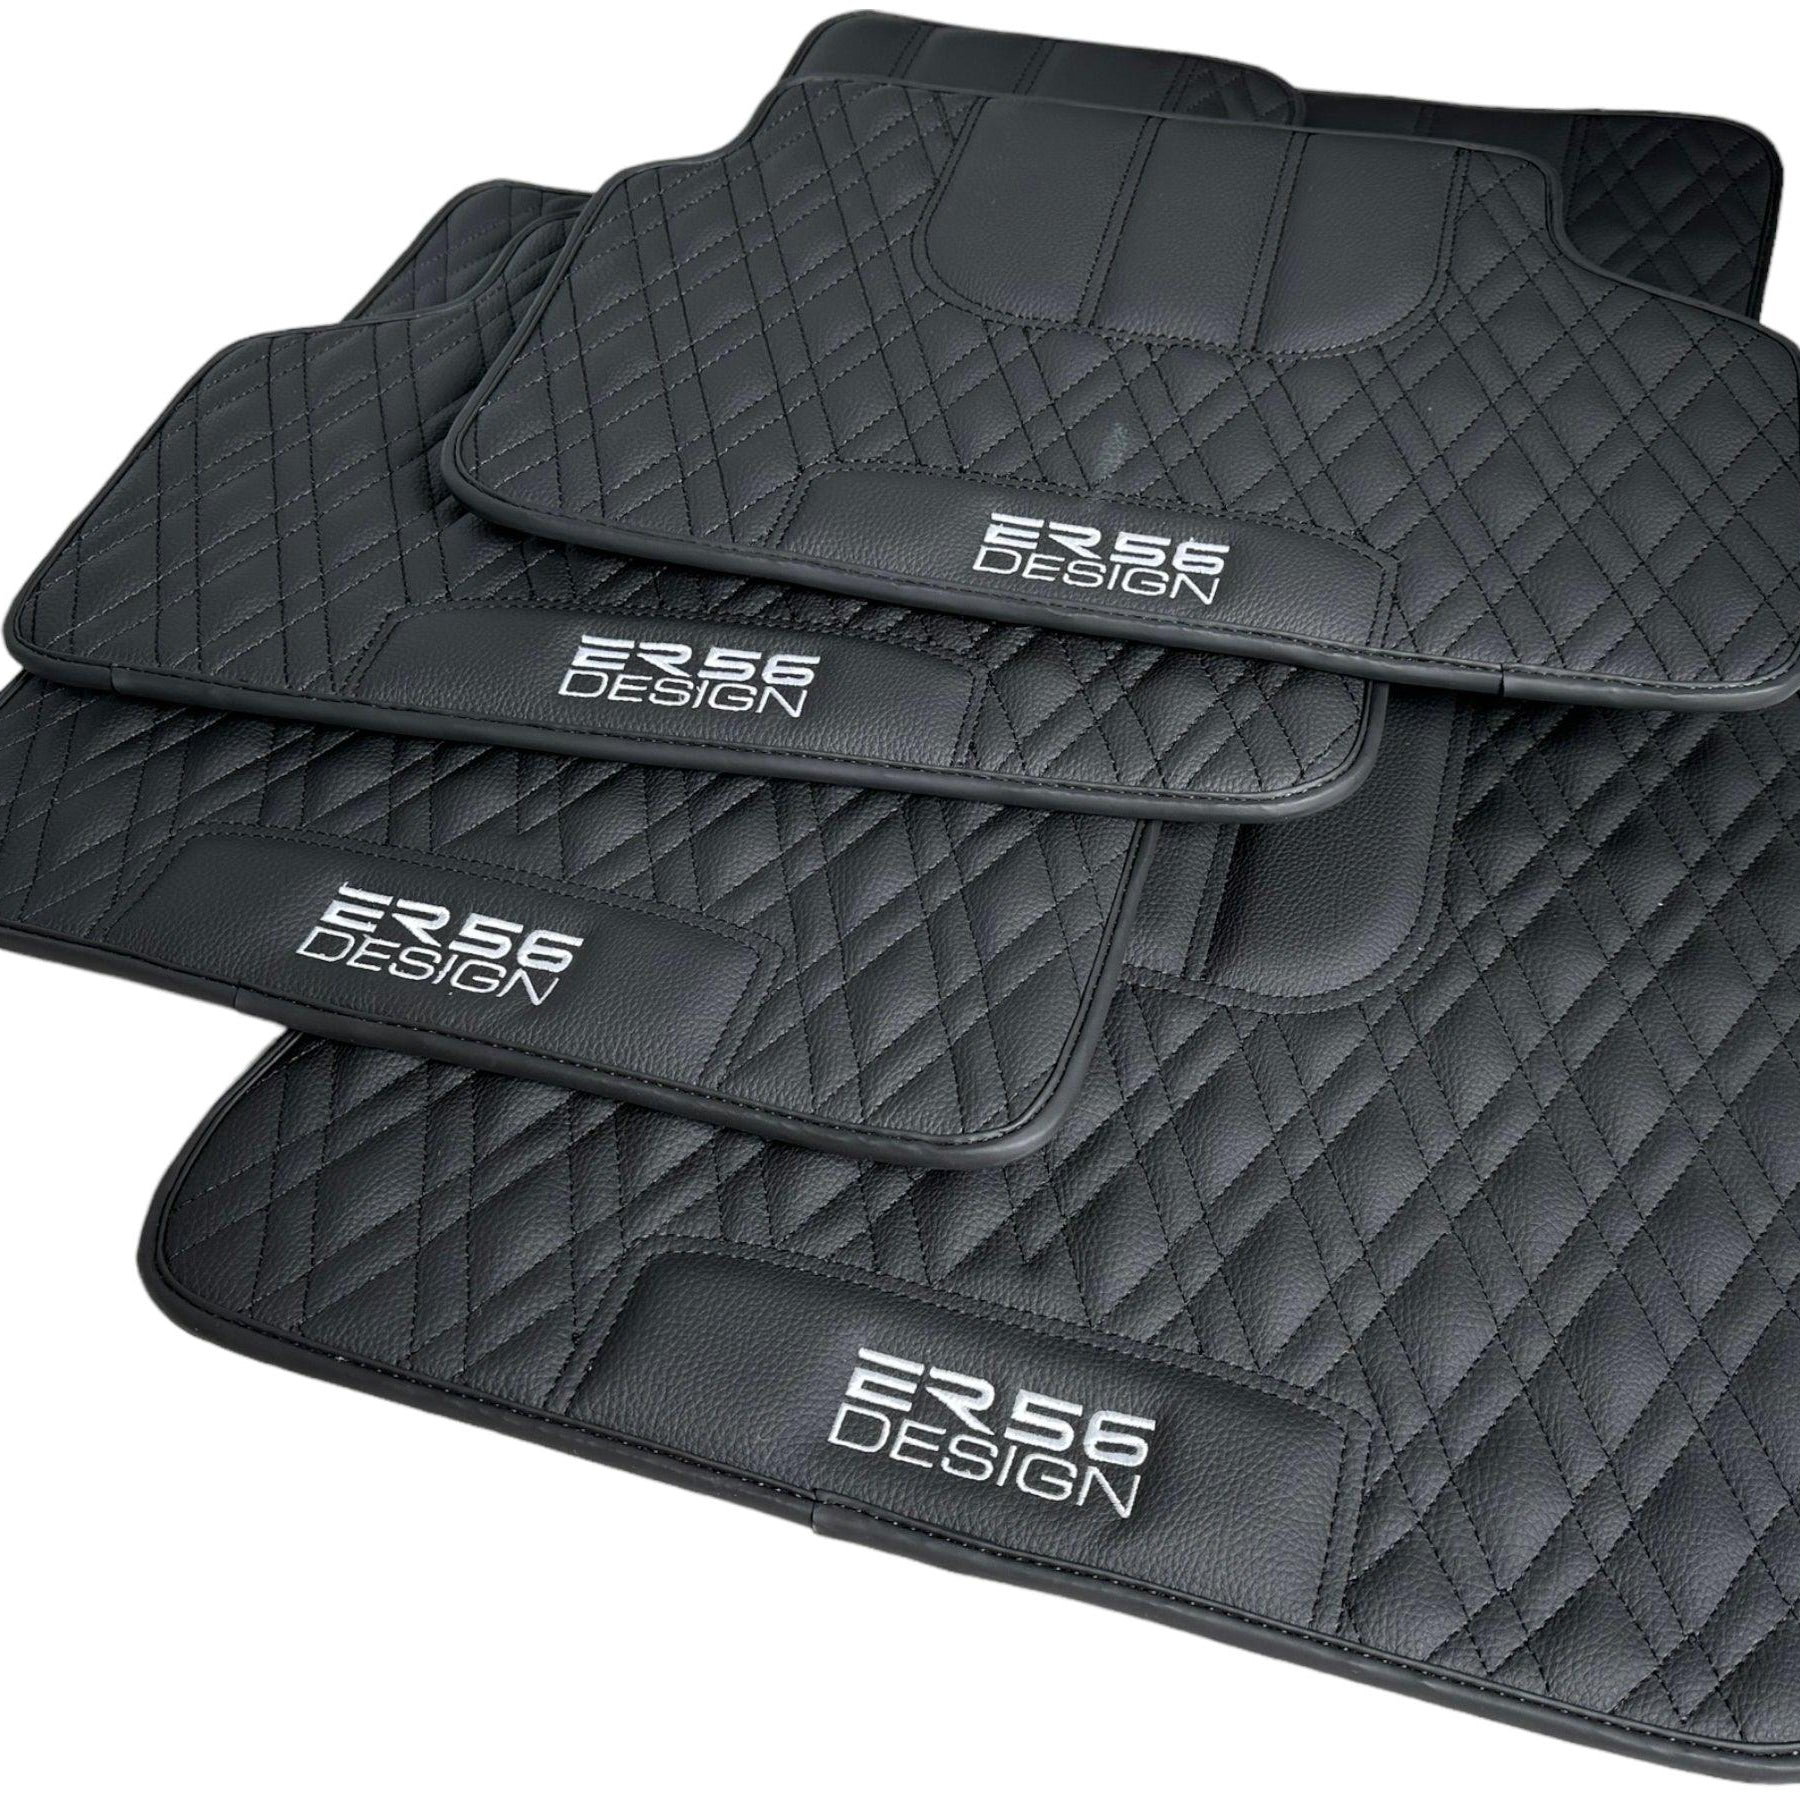 Floor Mats For BMW X3M Series F97 Black Leather Er56 Design - AutoWin